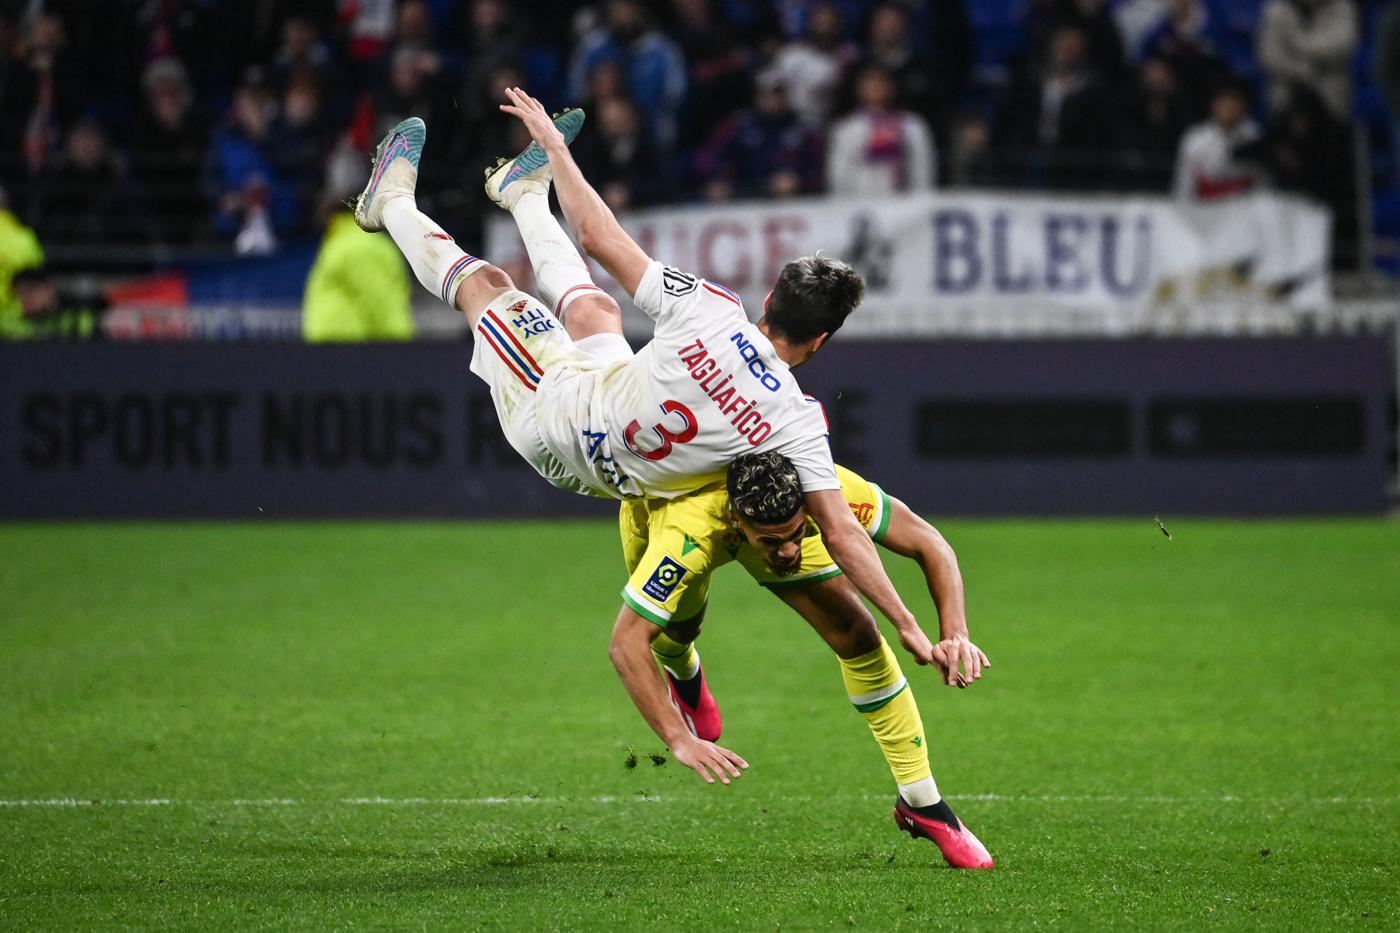 Lyon vs Nantes - 1:1. French Championship, round 28. Match Review, Statistics